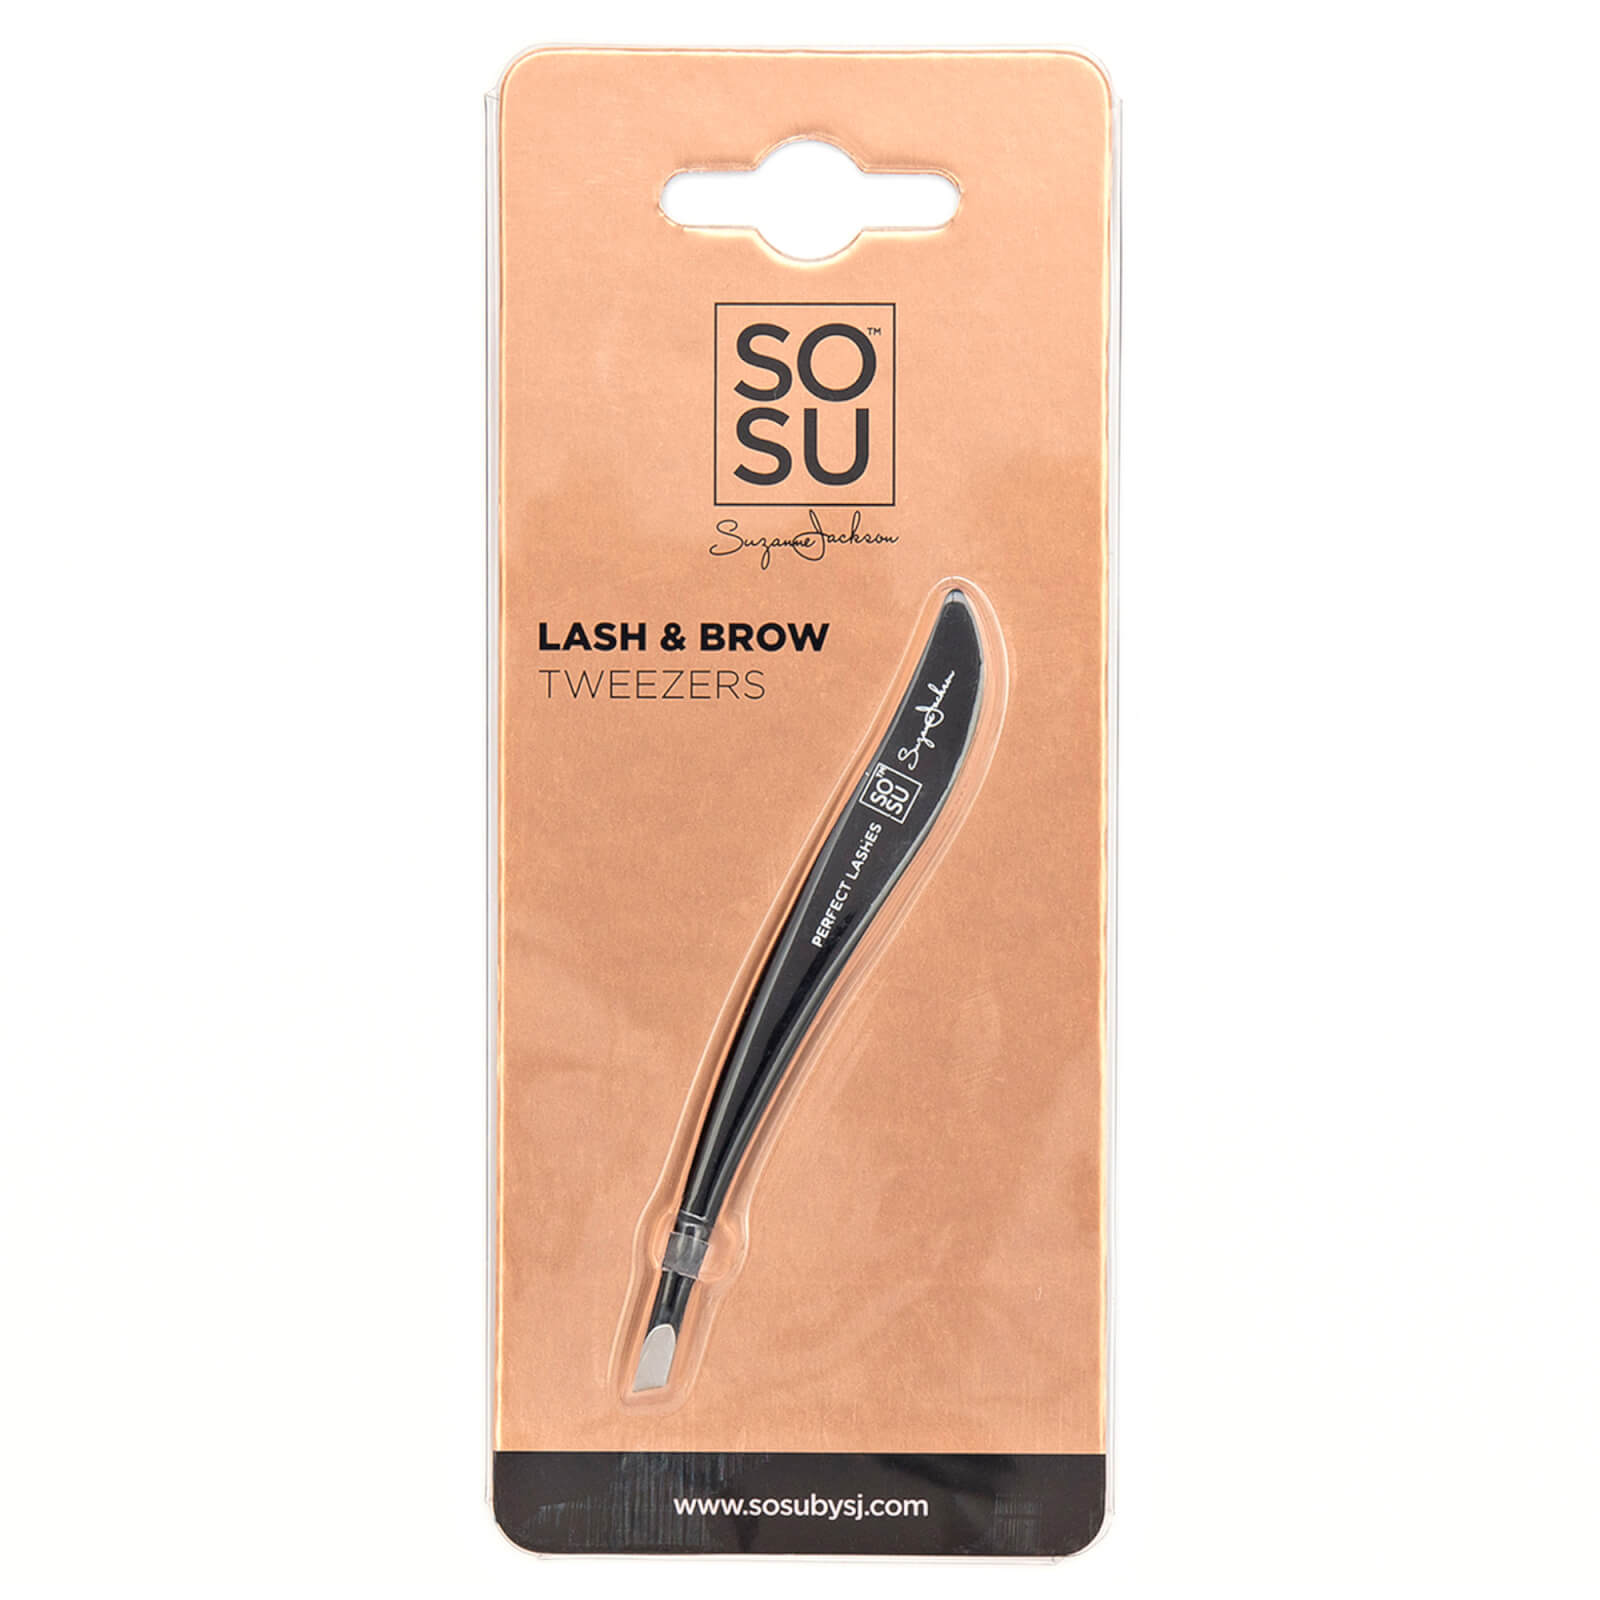 Sosu Cosmetics Sosu Lash & Brow Tweezers